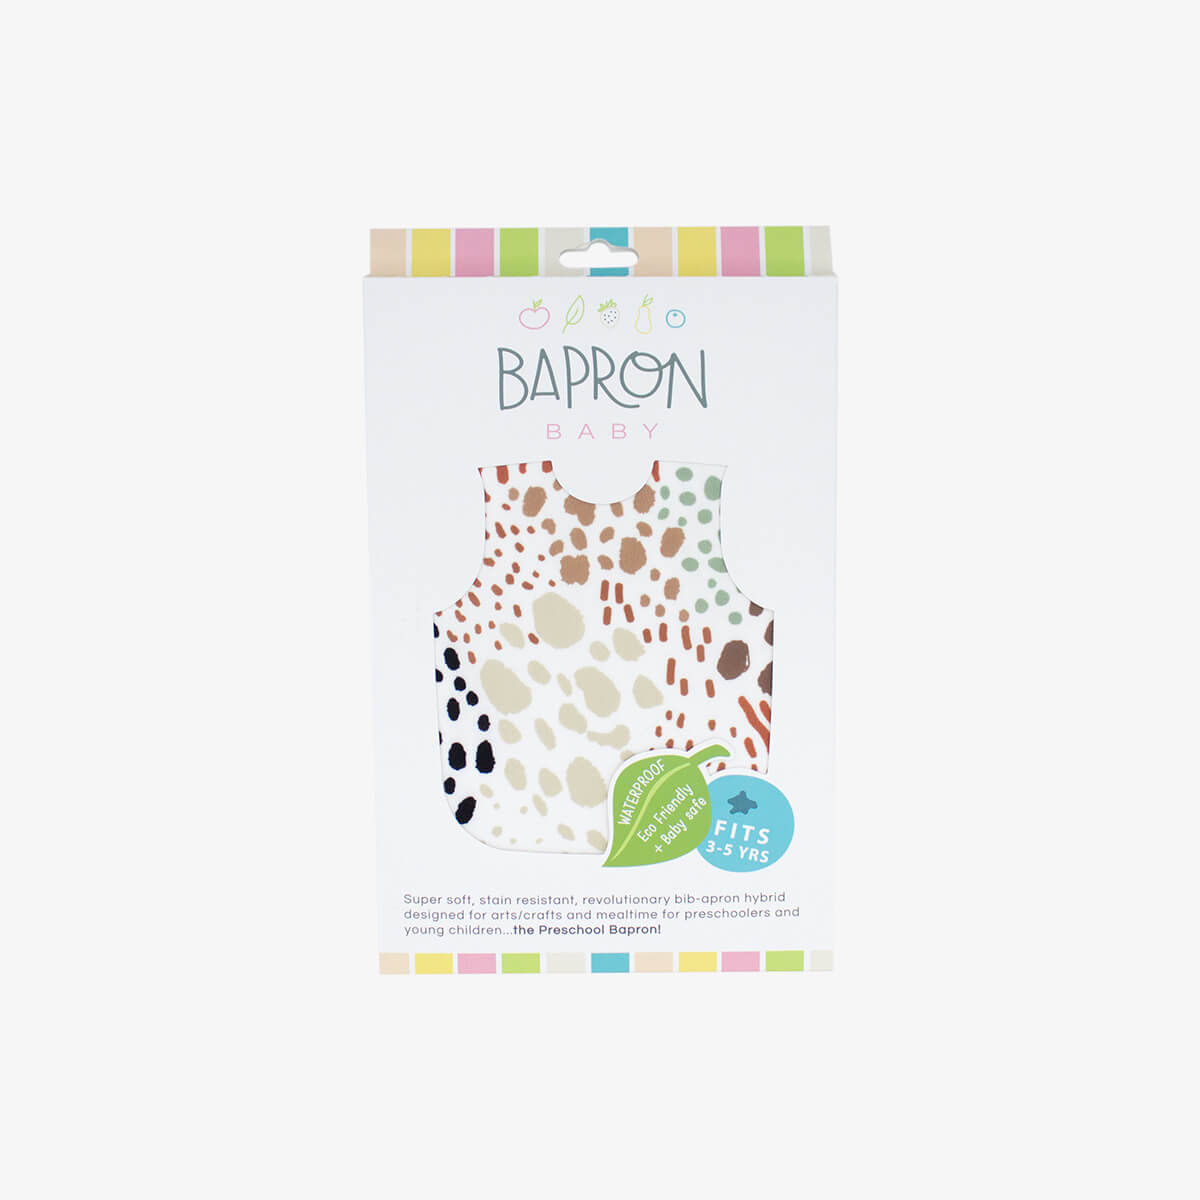 BapronBaby® Bapron in Wild / Bib + Apron That Safely Ties Around the Body